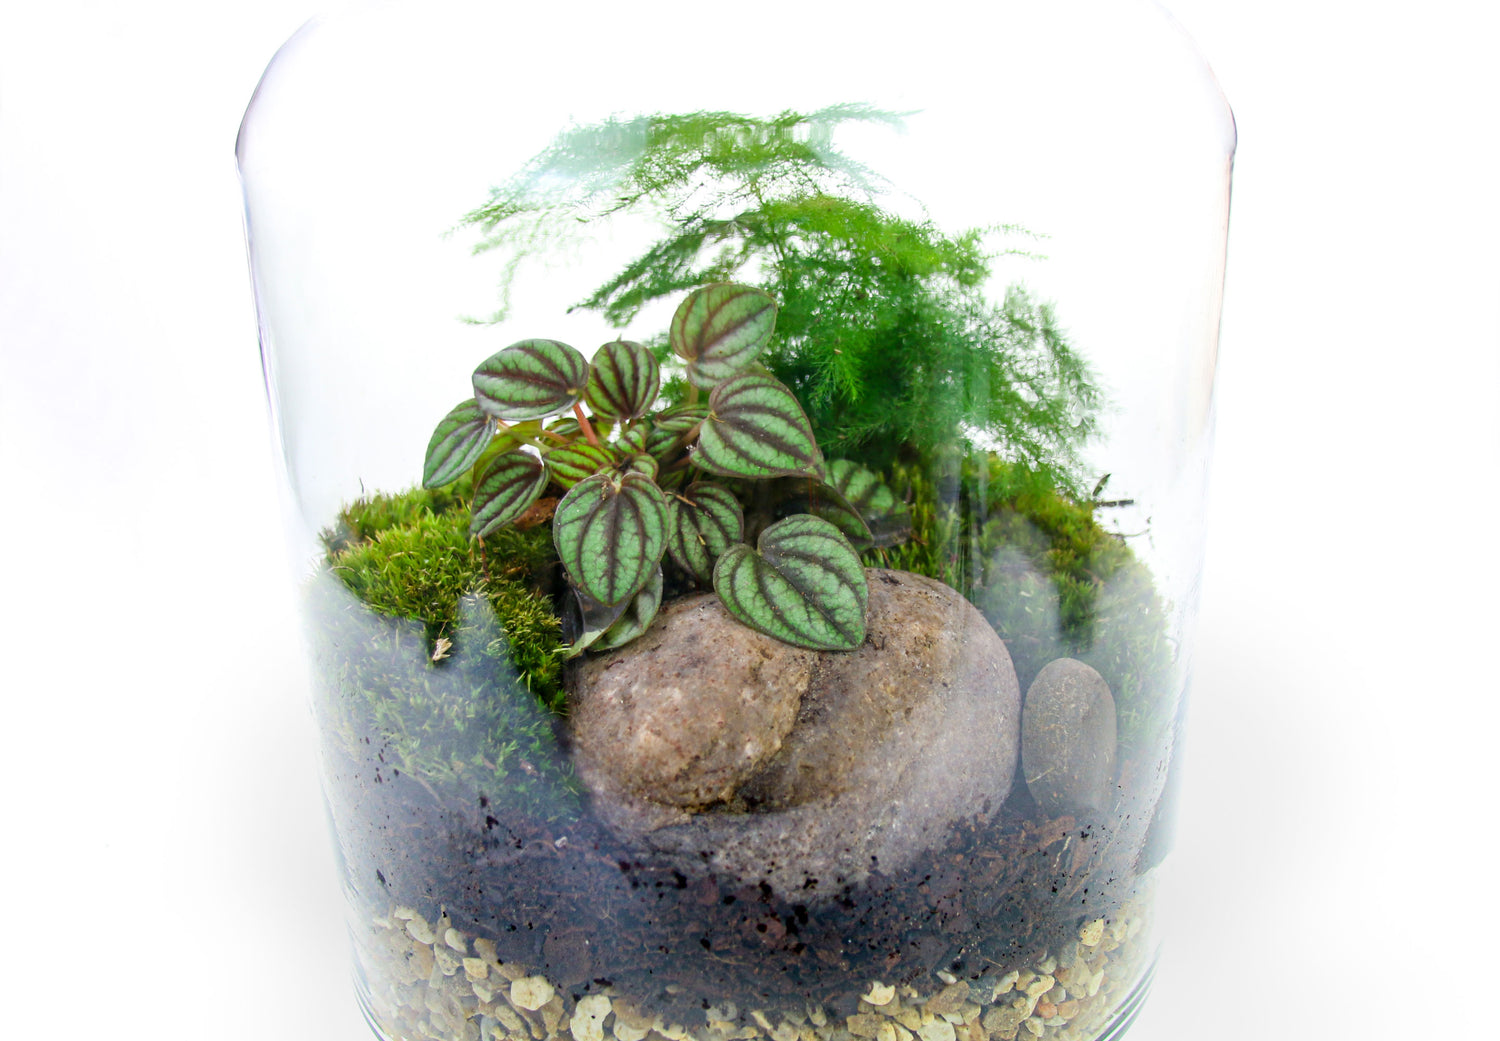 Build a terrarium with living moss, gift ideas